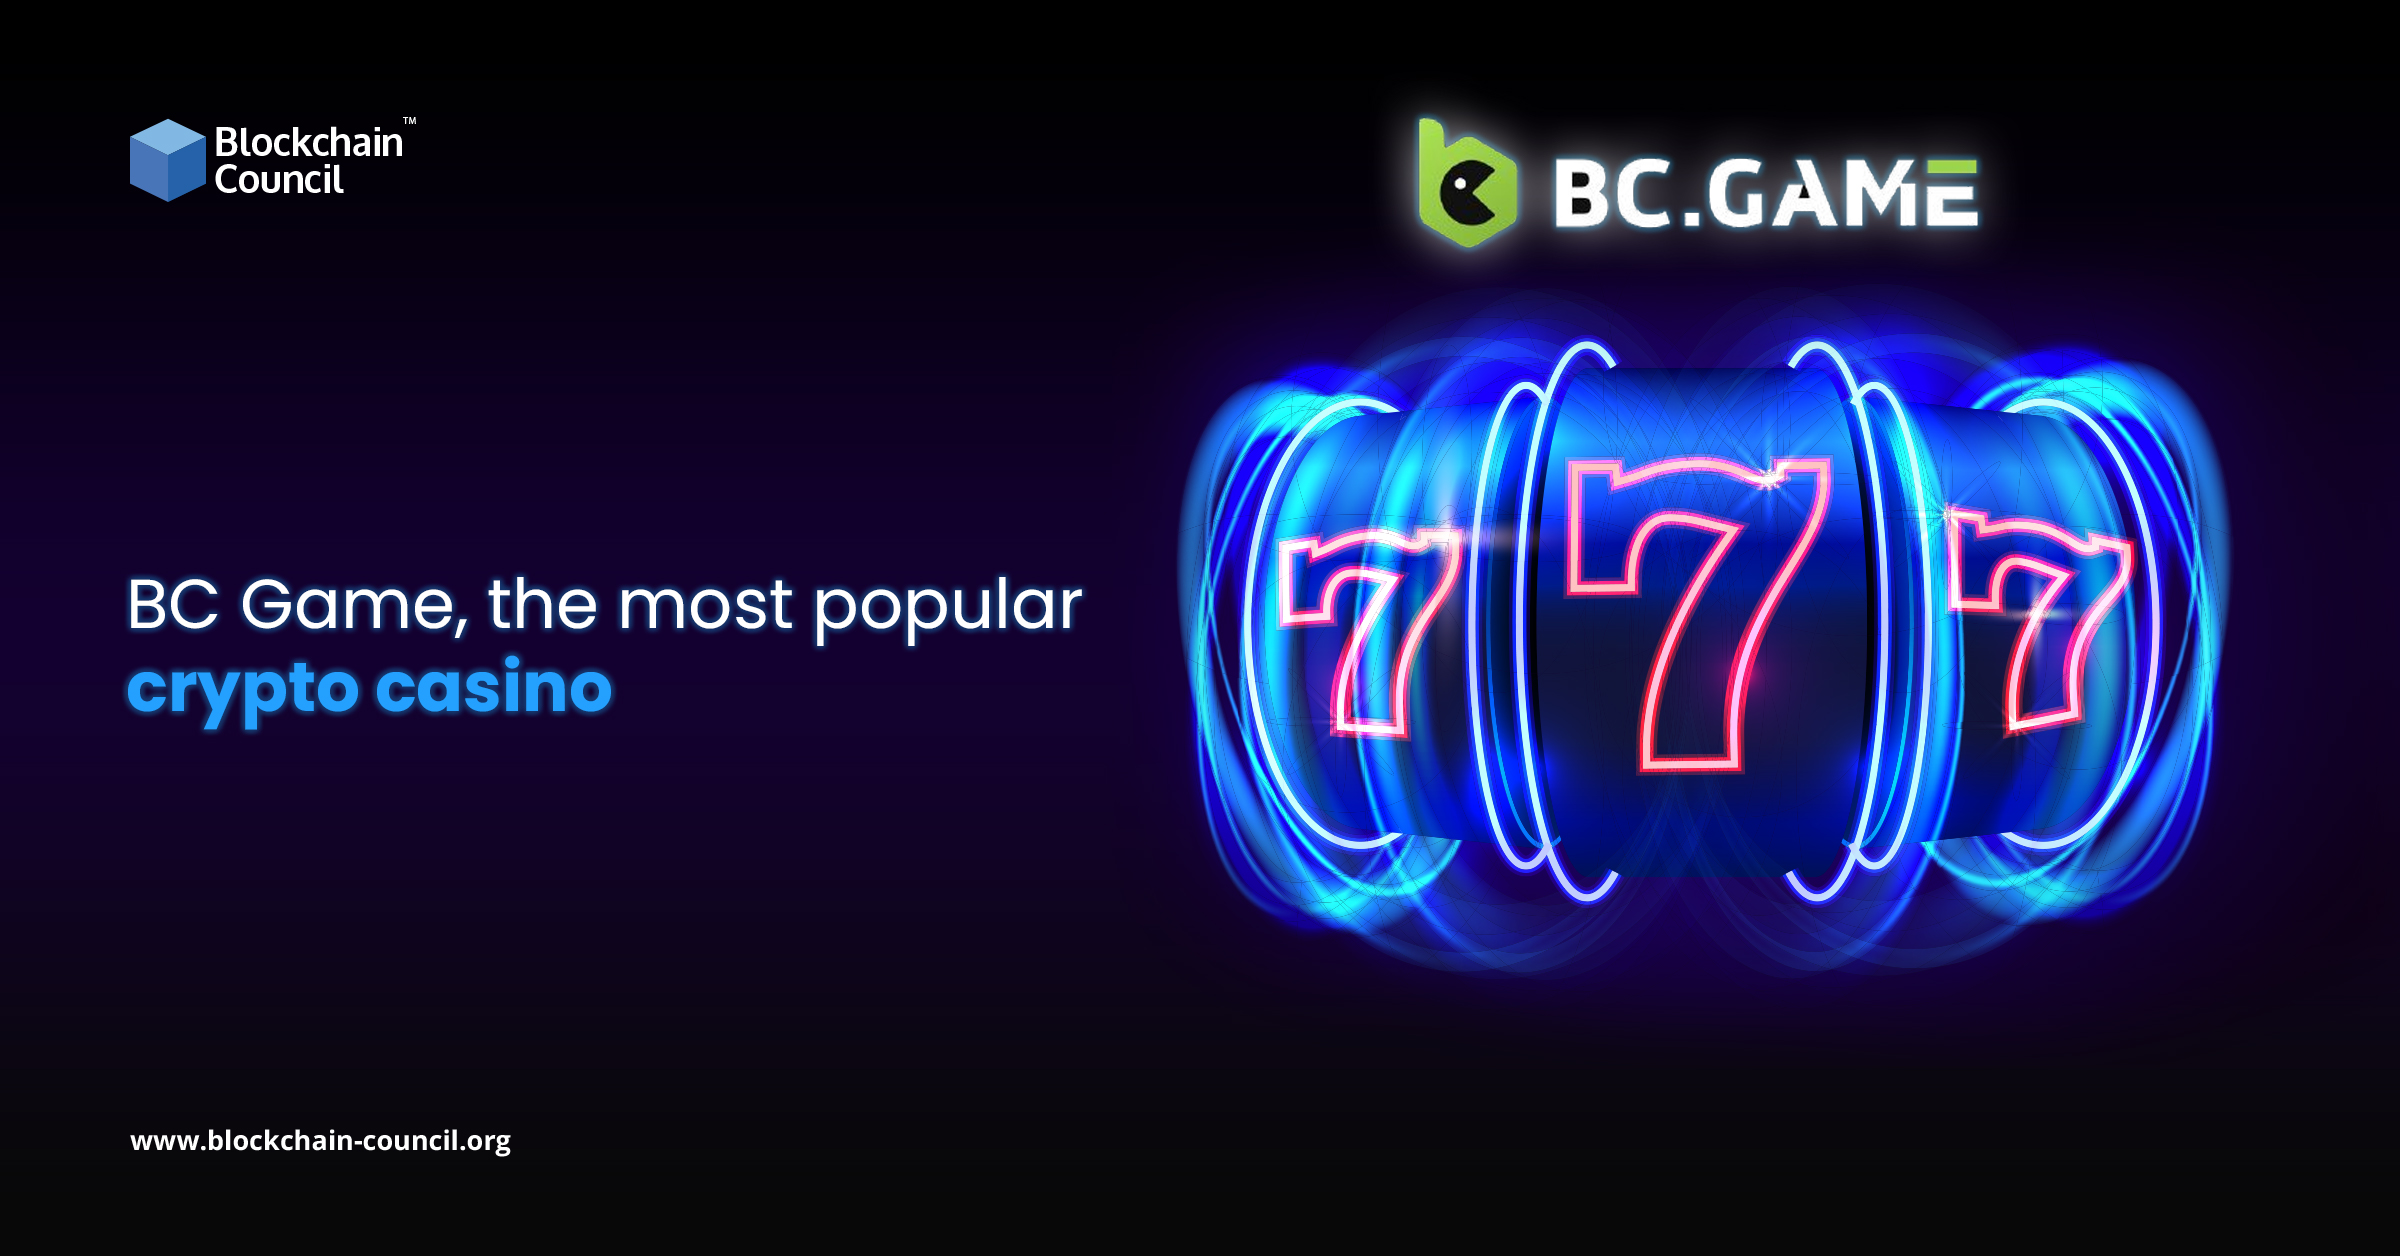 BC Game, the most popular crypto casino - Blockchain Council